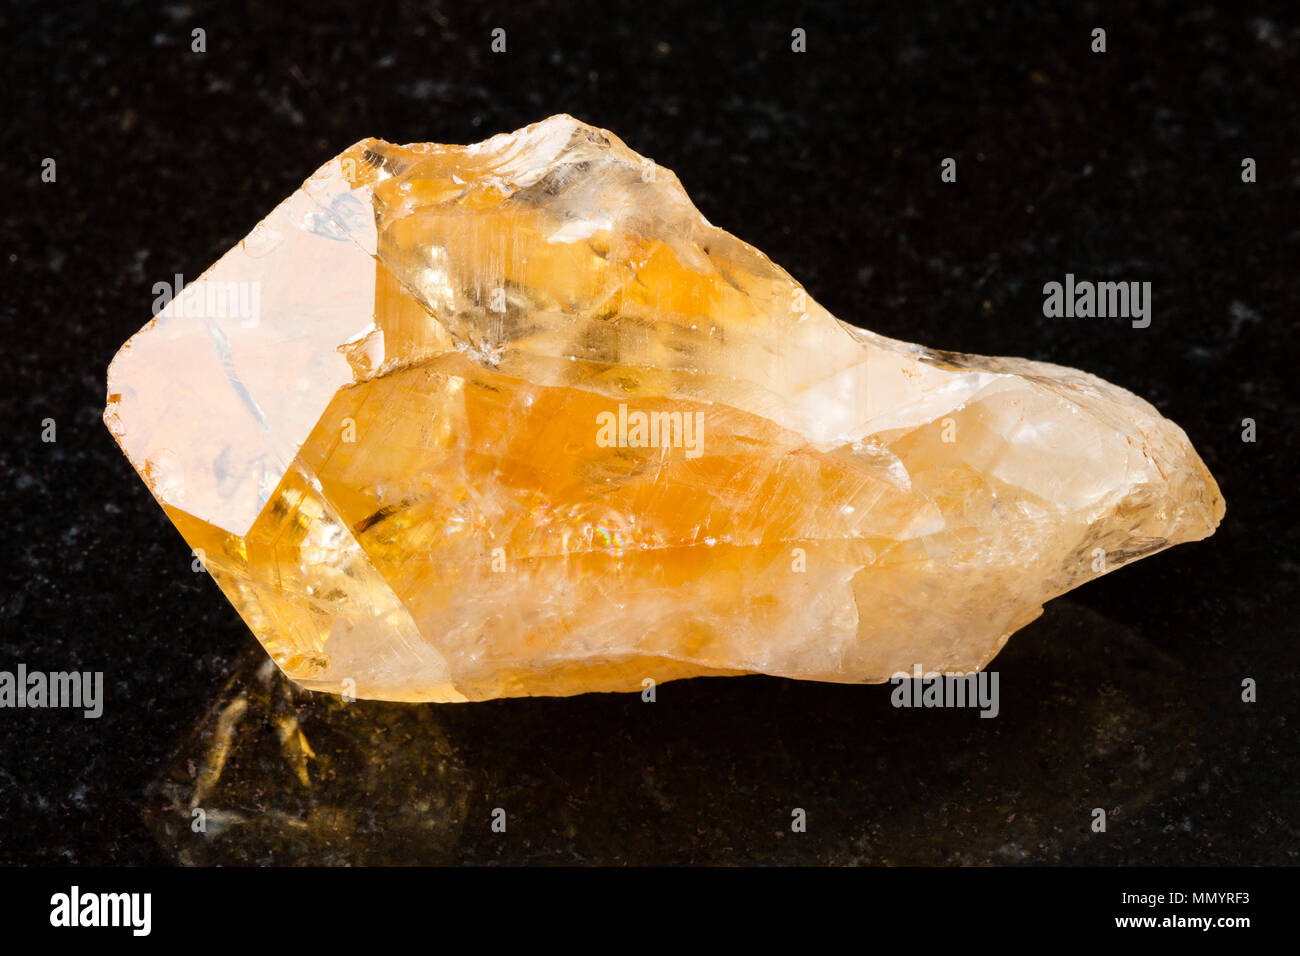 Macro Shooting Of Natural Rock Specimen Crystal Of Citrine Yellow Quartz Gemstone On Black Granite Background From Brazil Stock Photo Alamy